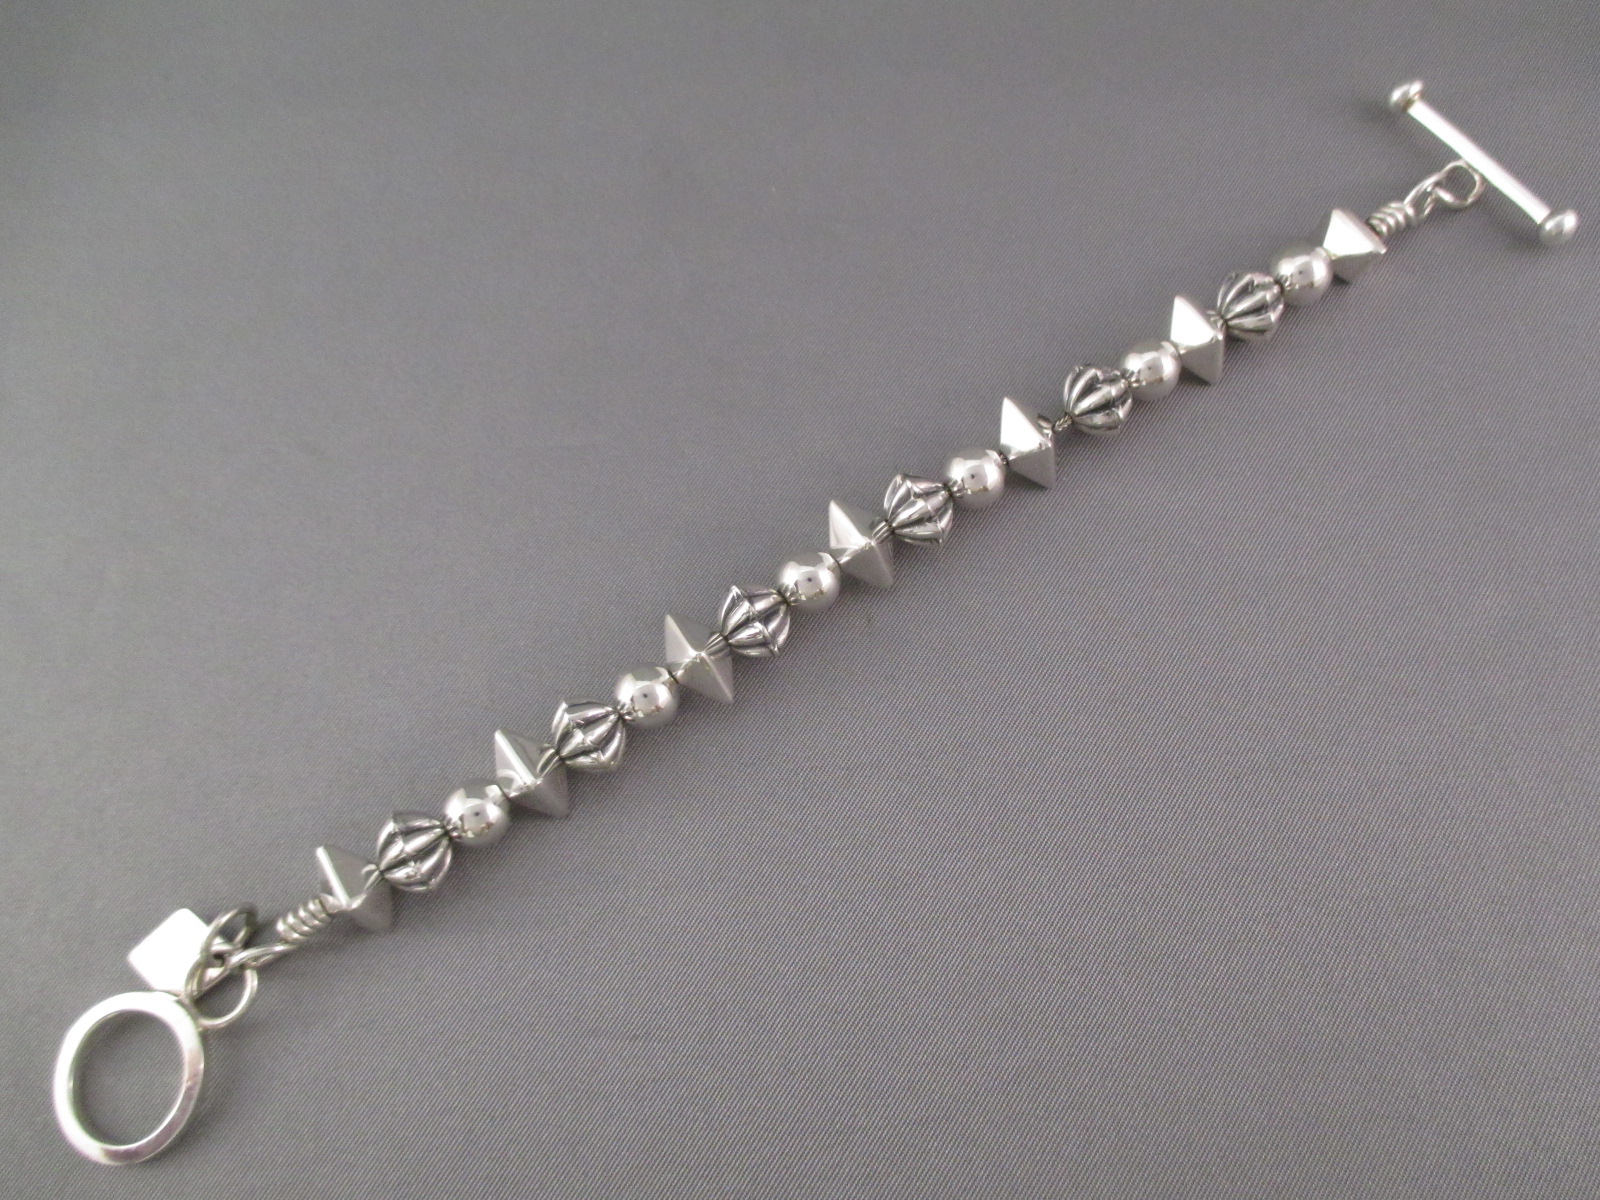 Trent Lee Bracelet - Sterling Silver Bead Link Bracelet by Navajo jewelry artist, Trent Lee-Anderson $395-